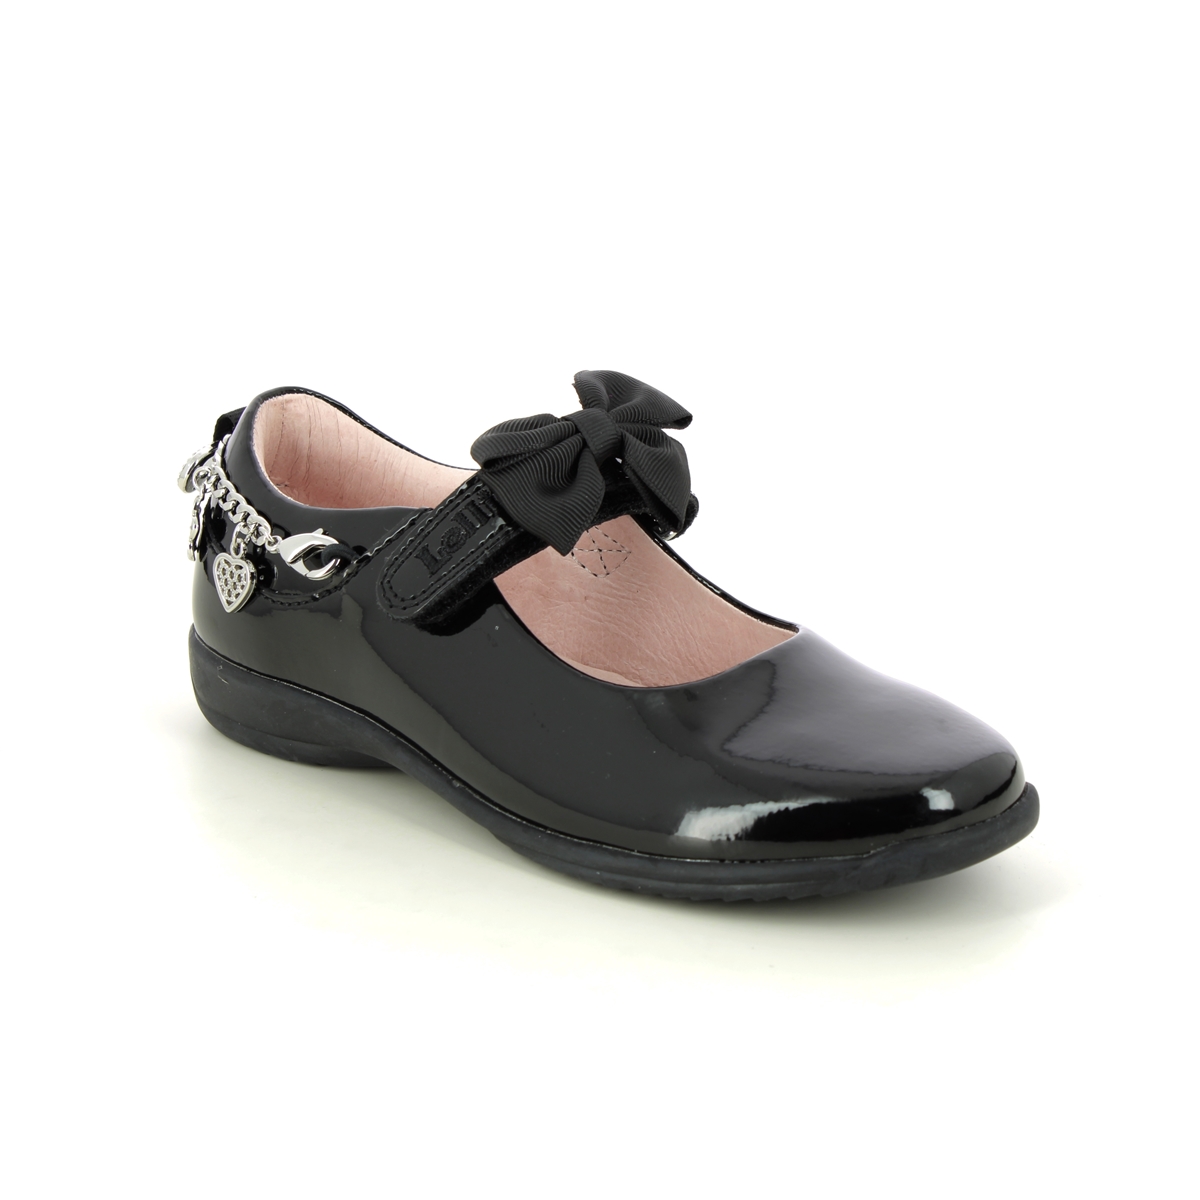 Lelli Kelly - Alicia Bracelet F In Black Patent Lk8219-Db01 In Size 28 In Plain Black Patent Girls Shoes  In Black Patent For School For kids